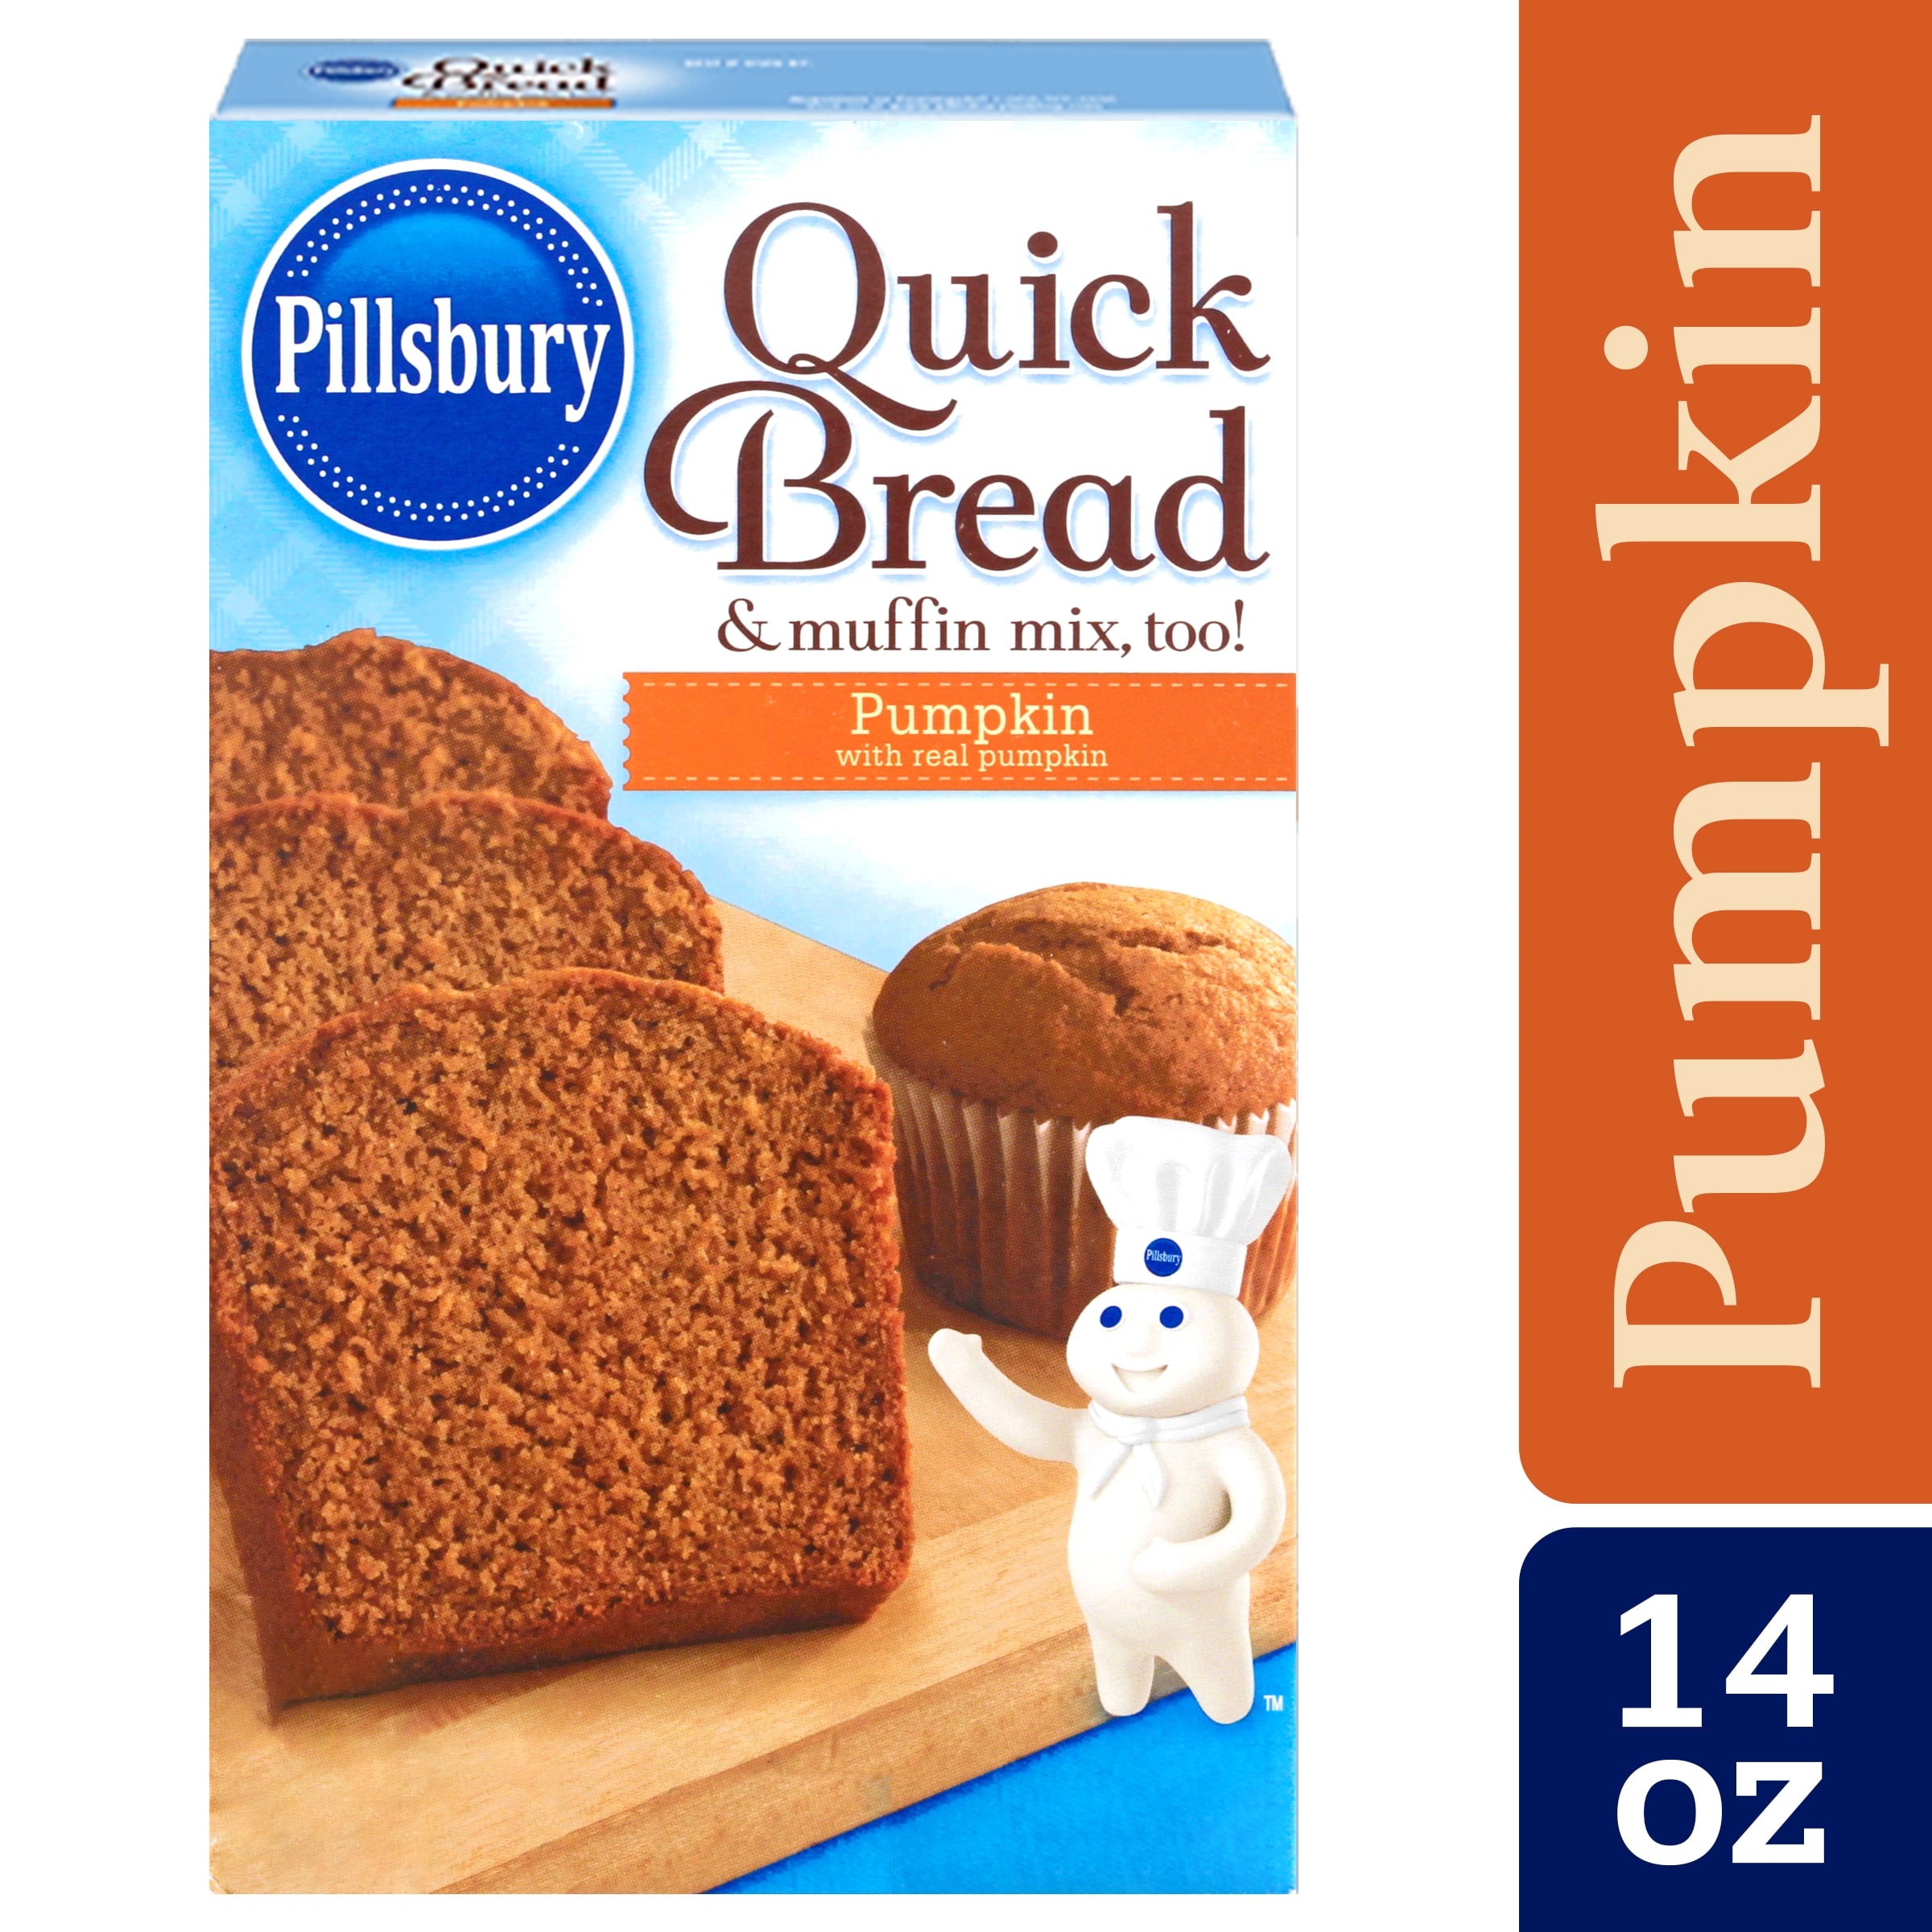 Pillsbury Pumpkin Quick Bread and Muffin Mix, 14 Oz Box